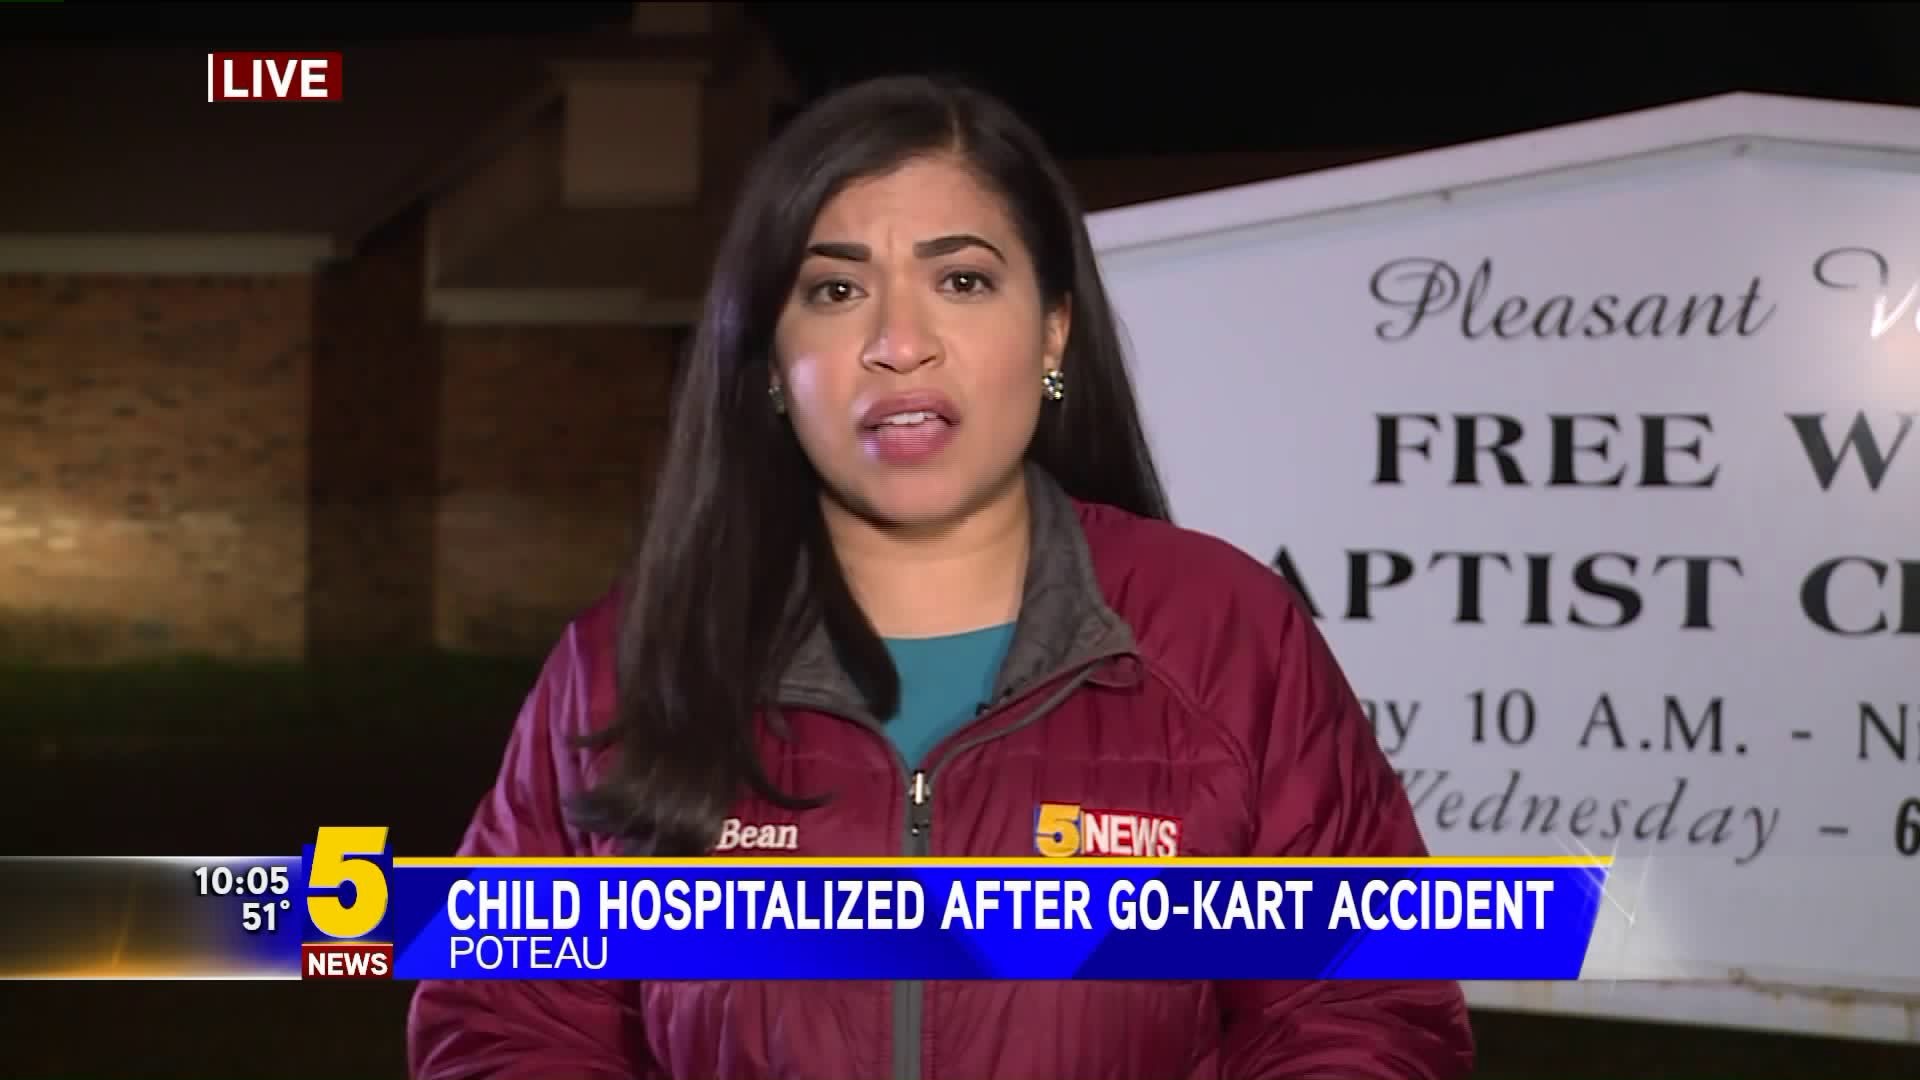 Child Hospitalized After Go-Kart Accident